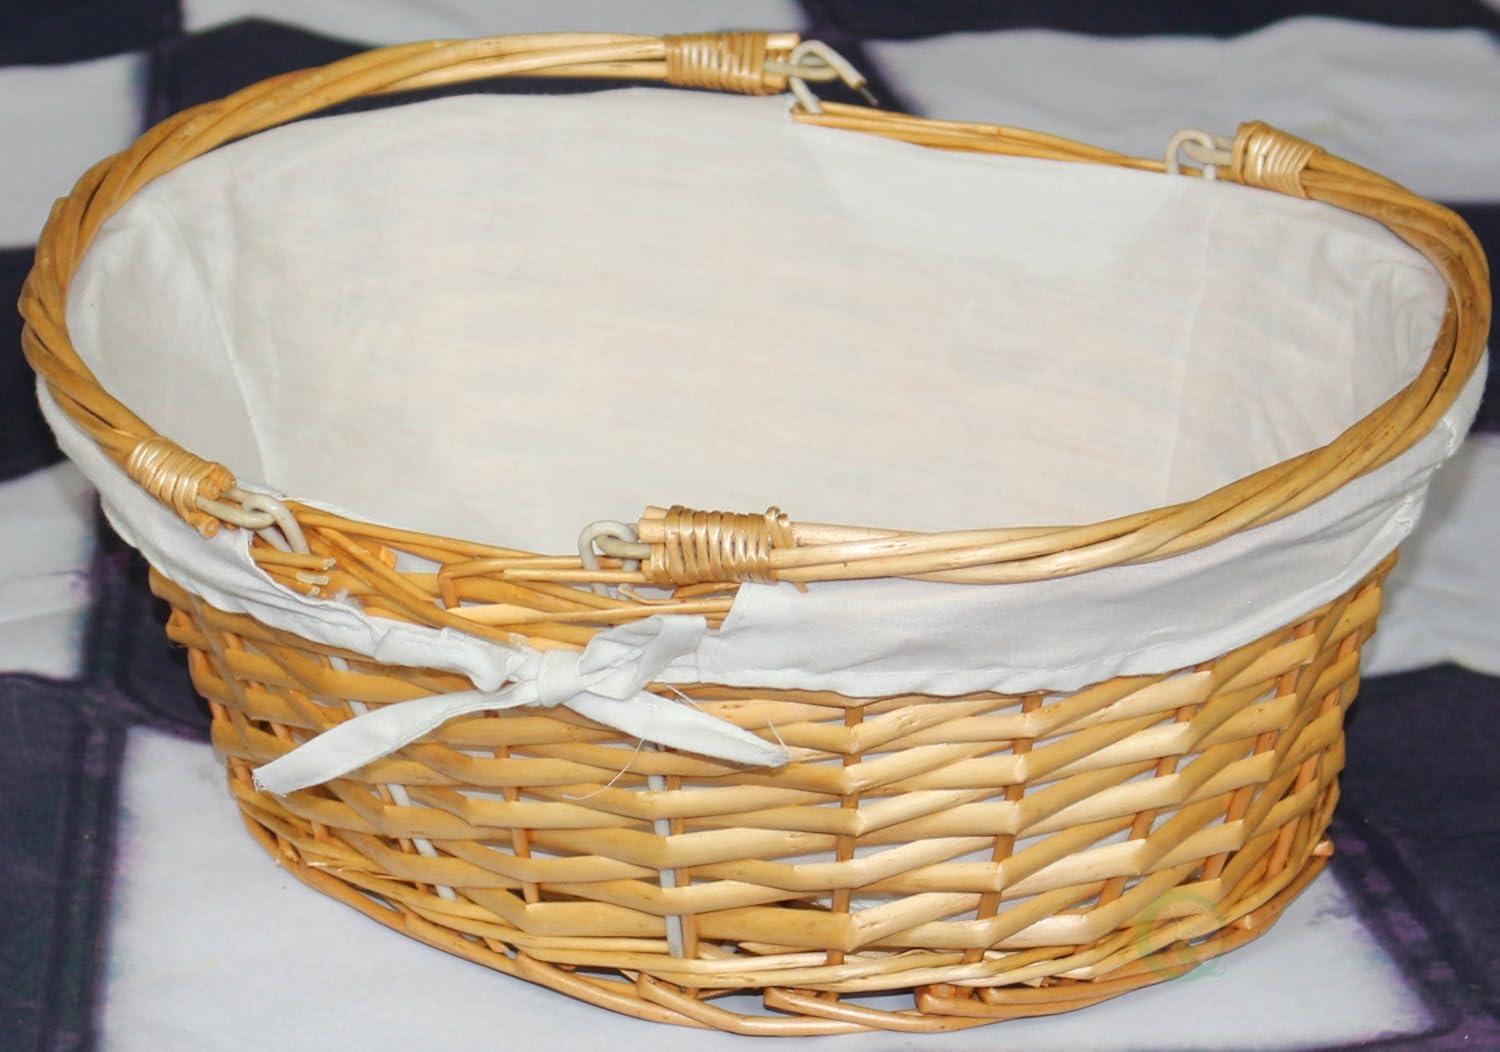 Elegant Oval Wicker Storage Basket with Fabric Lining